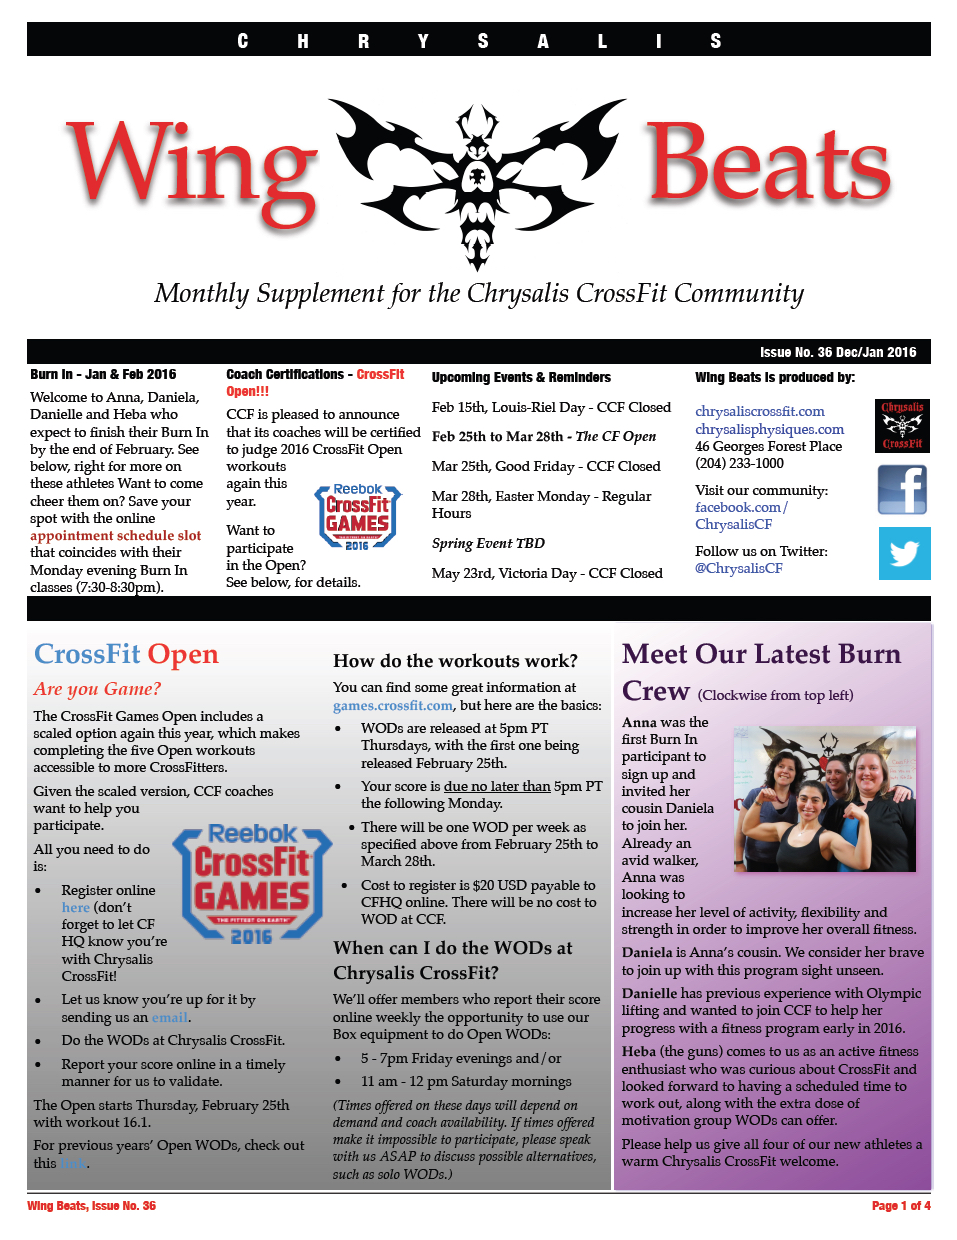 WingBeats Issue #36 - DecJan 2016